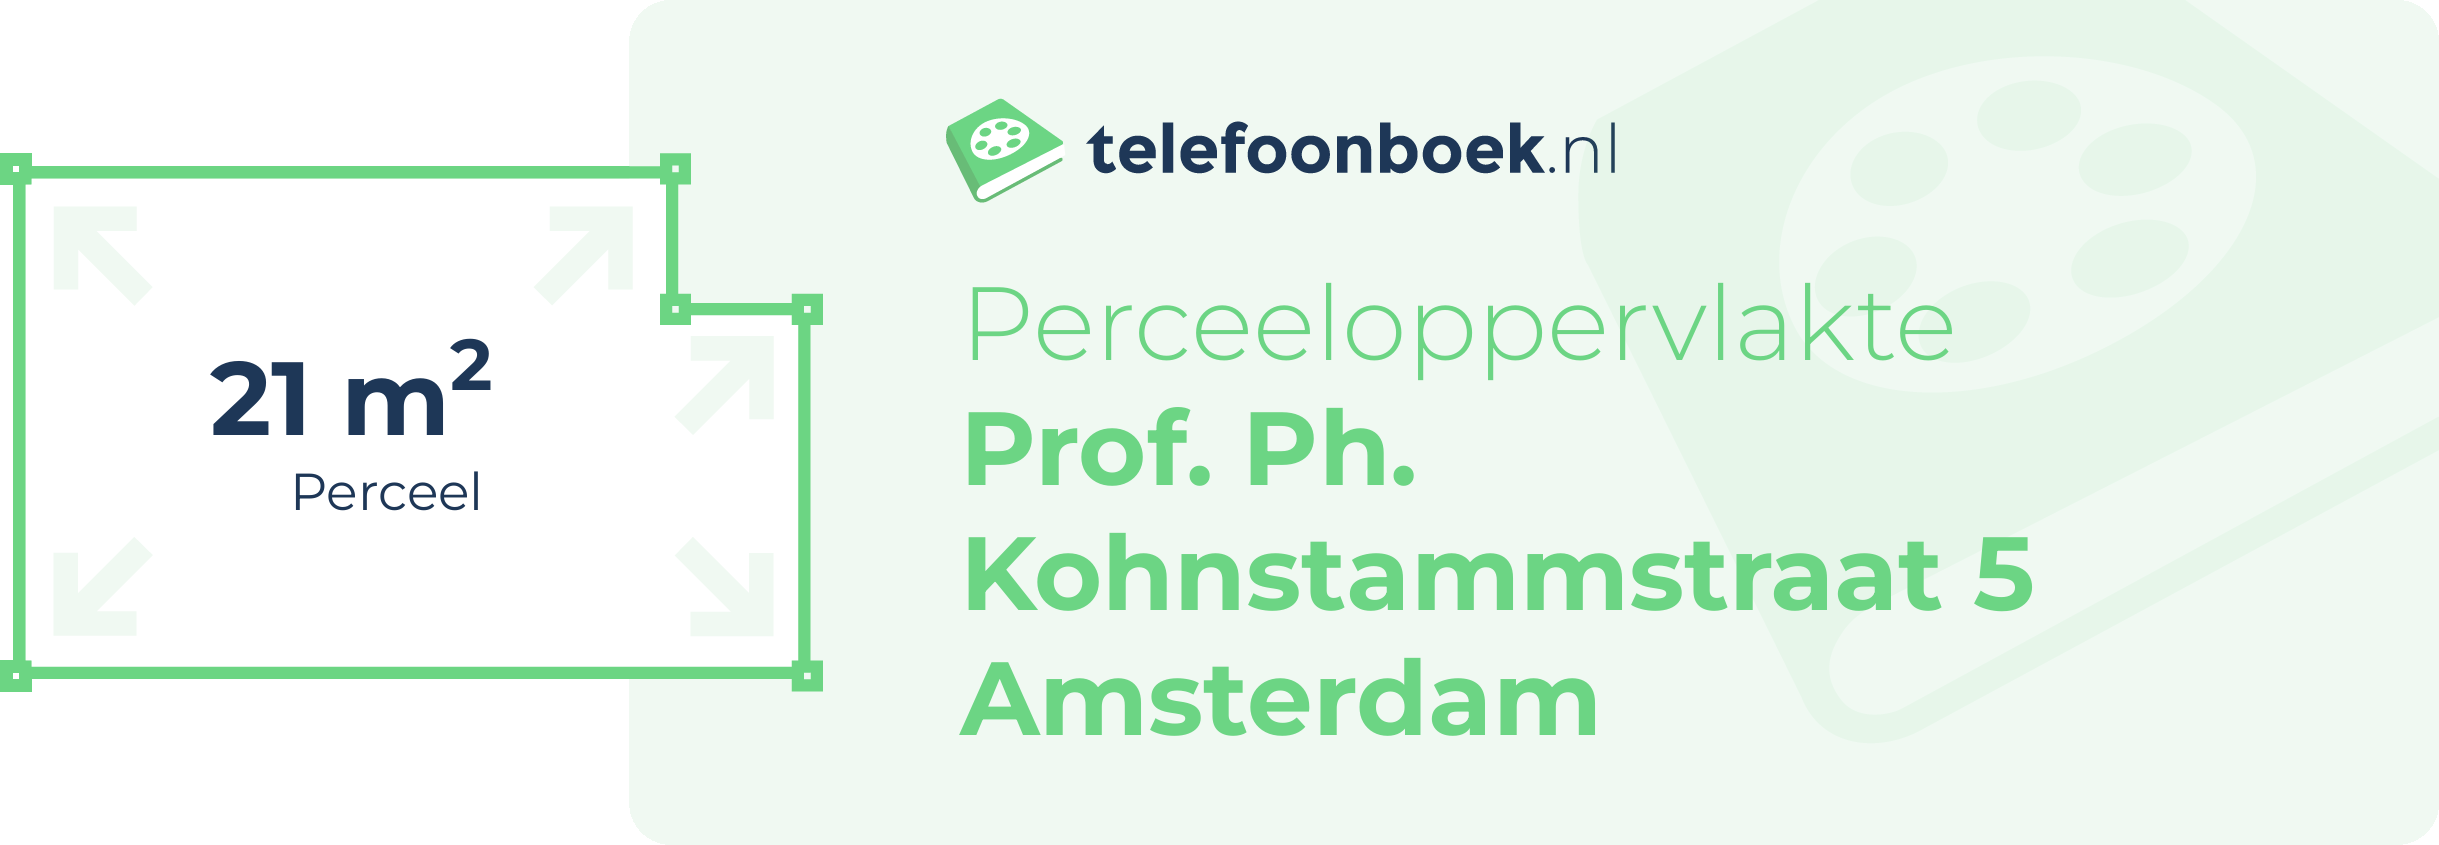 Perceeloppervlakte Prof. Ph. Kohnstammstraat 5 Amsterdam